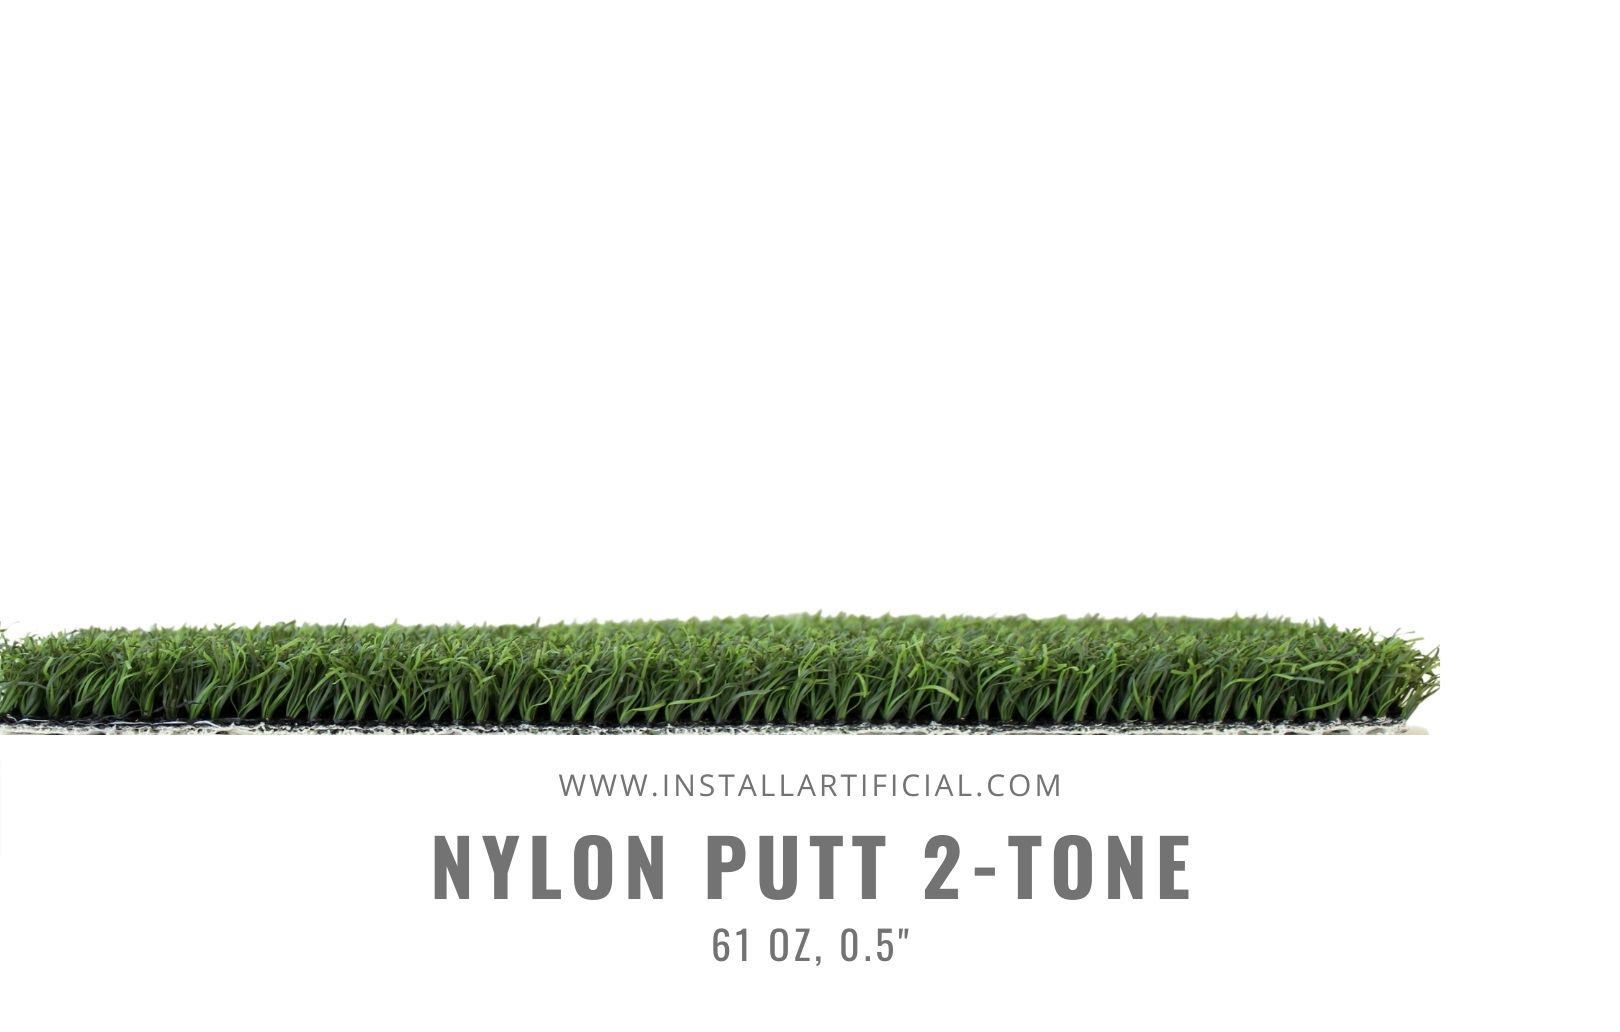 Nylon Putt 2-Tone, Synthetic Grass Warehouse, Tiger Turf